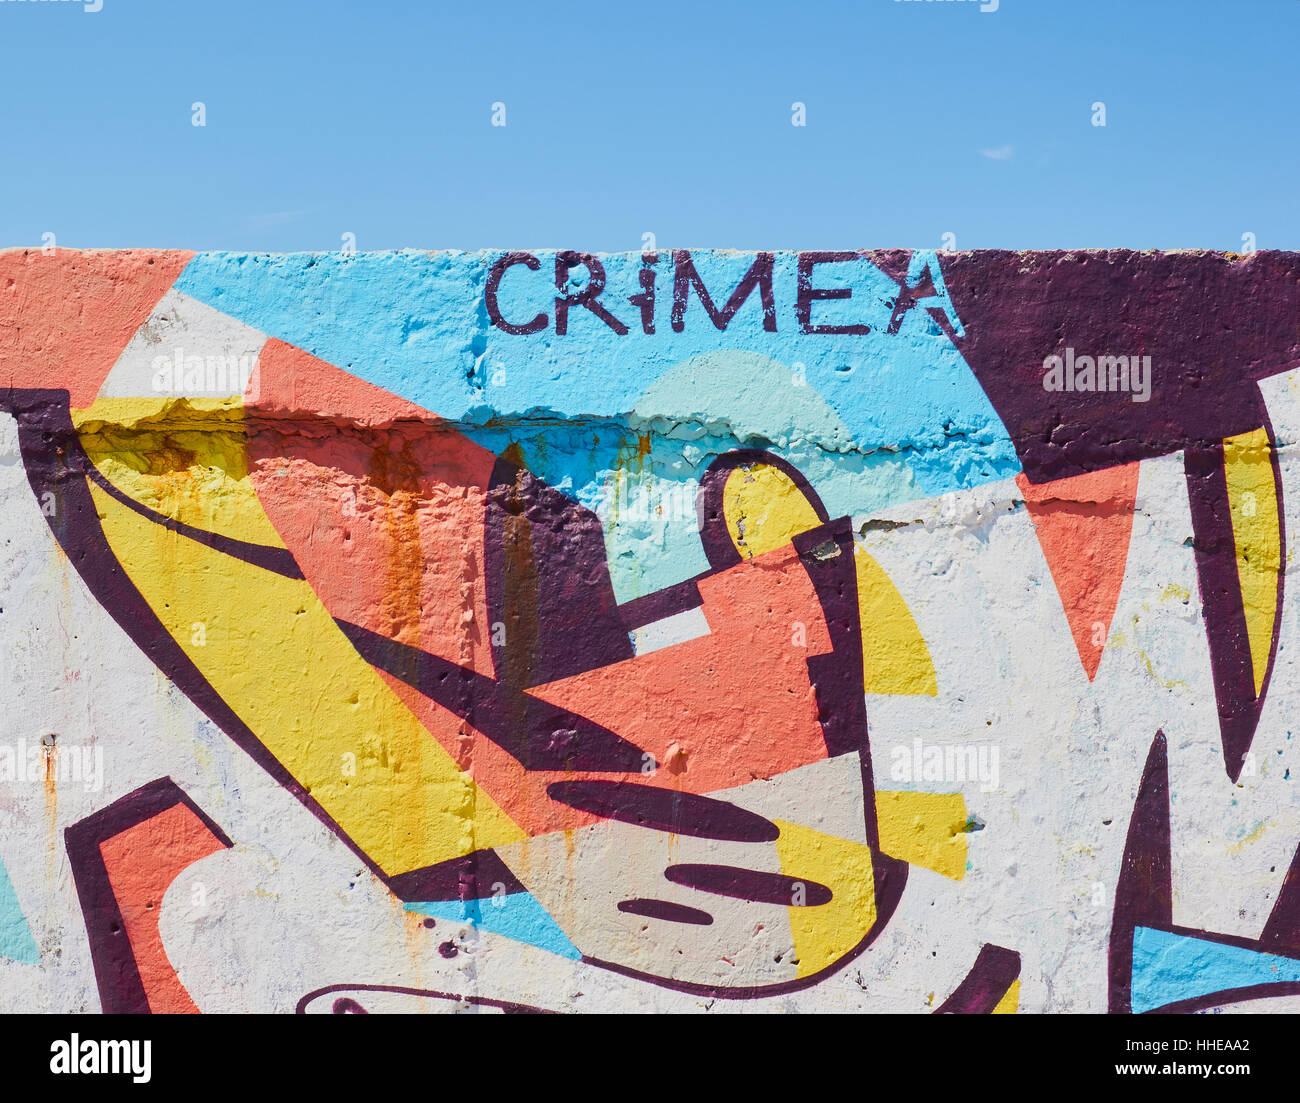 Abstract urban graffiti Crimea Stock Photo